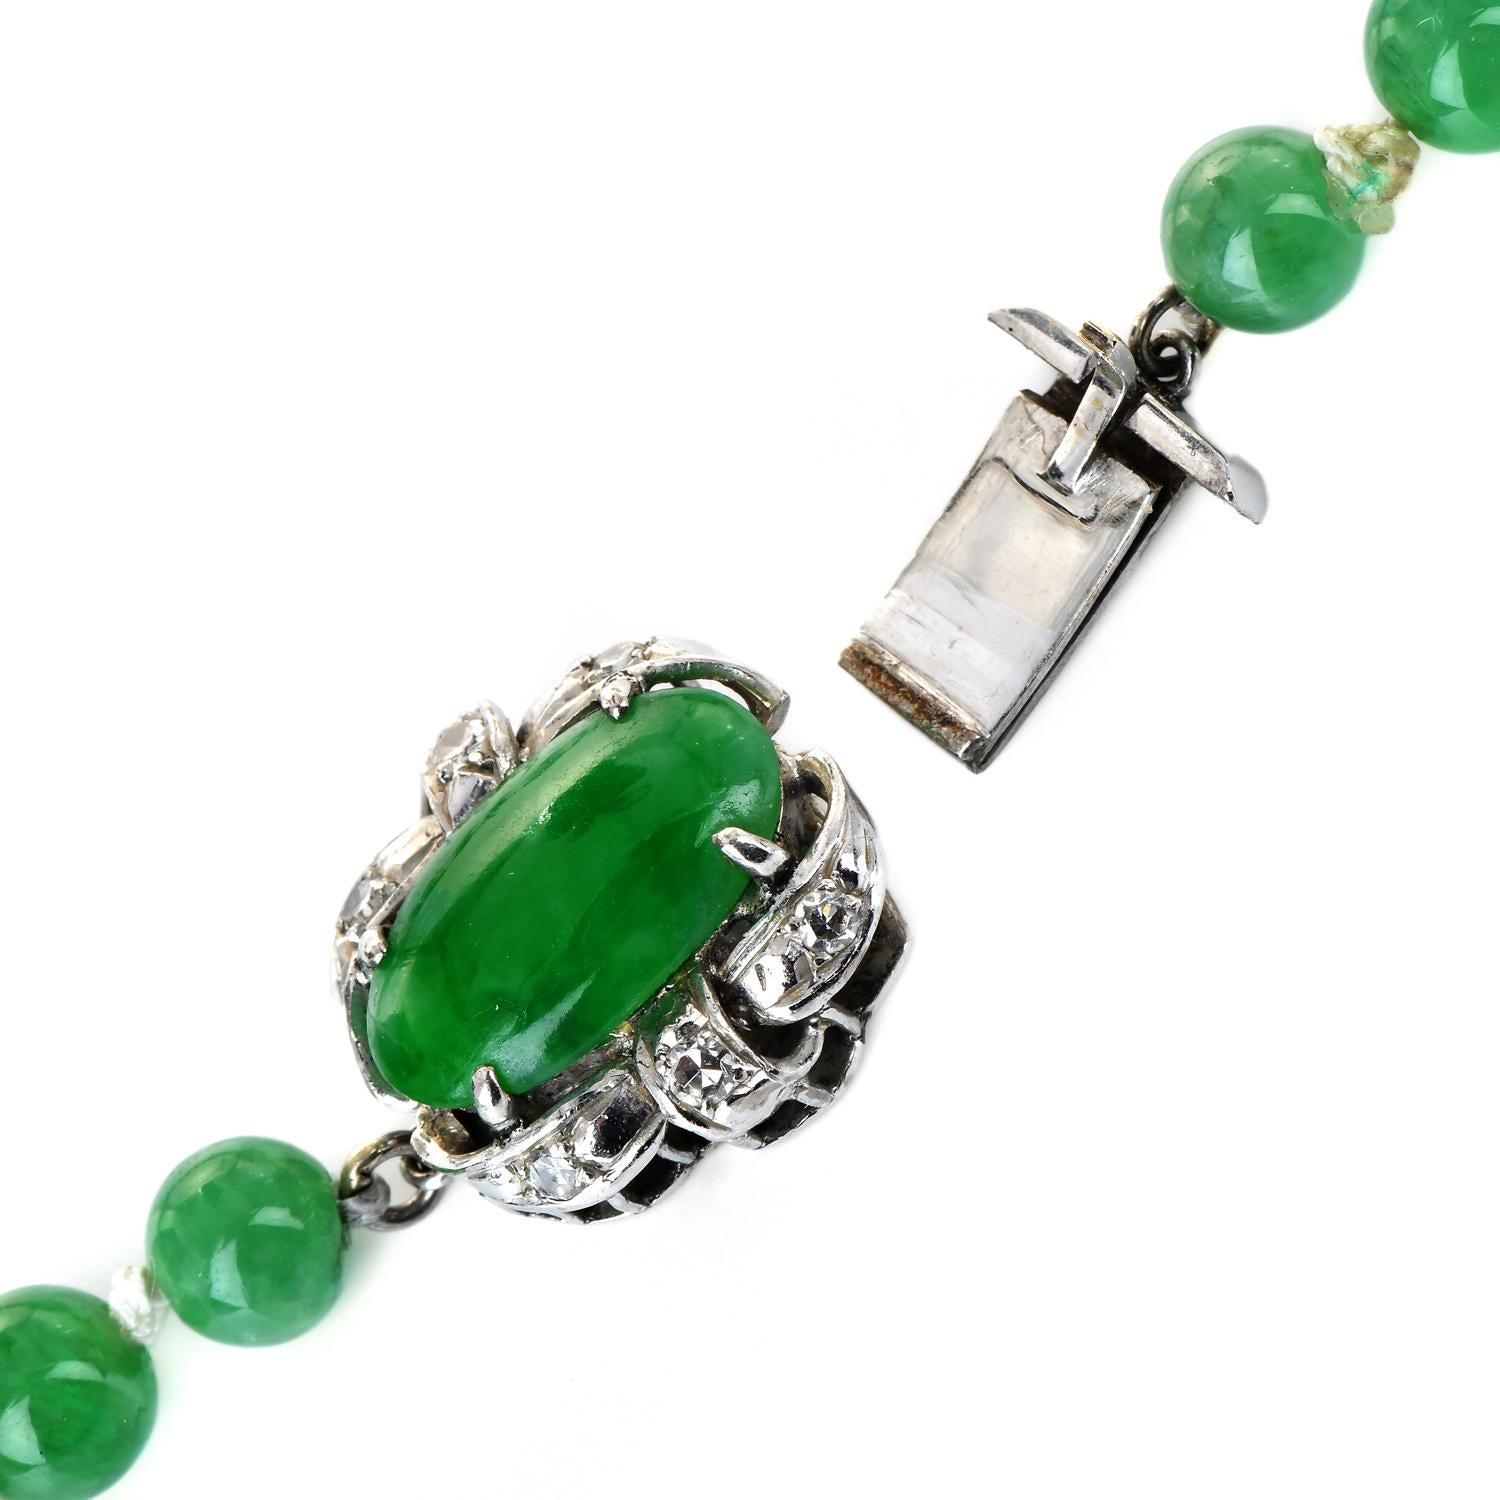 emerald beads cress